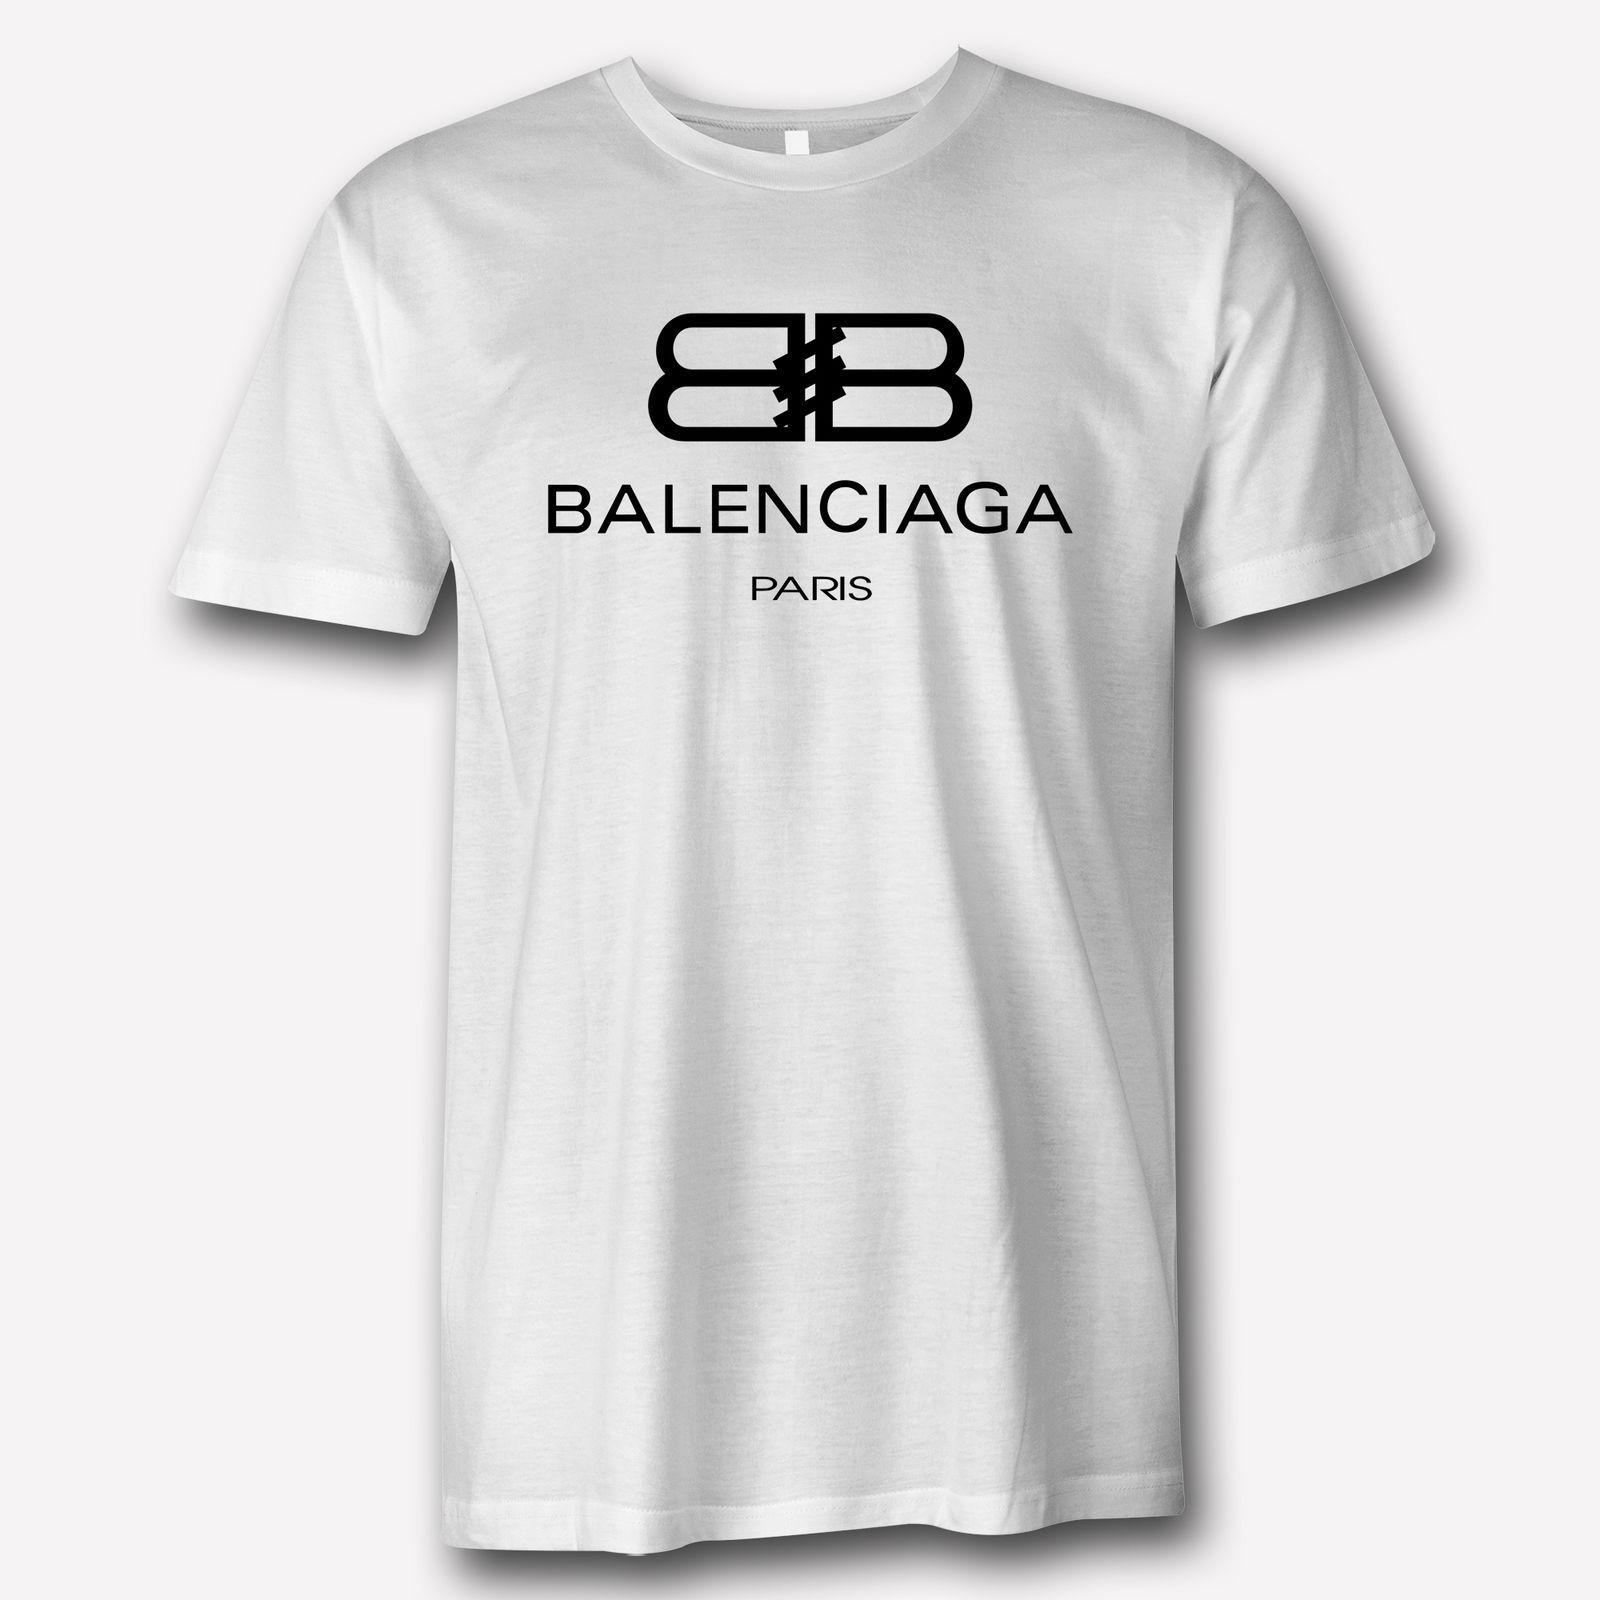 Famous Shirts Logo - New 1Balenciaga Paris Famous Apparel Logo White T Shirt 2018 Men'S ...